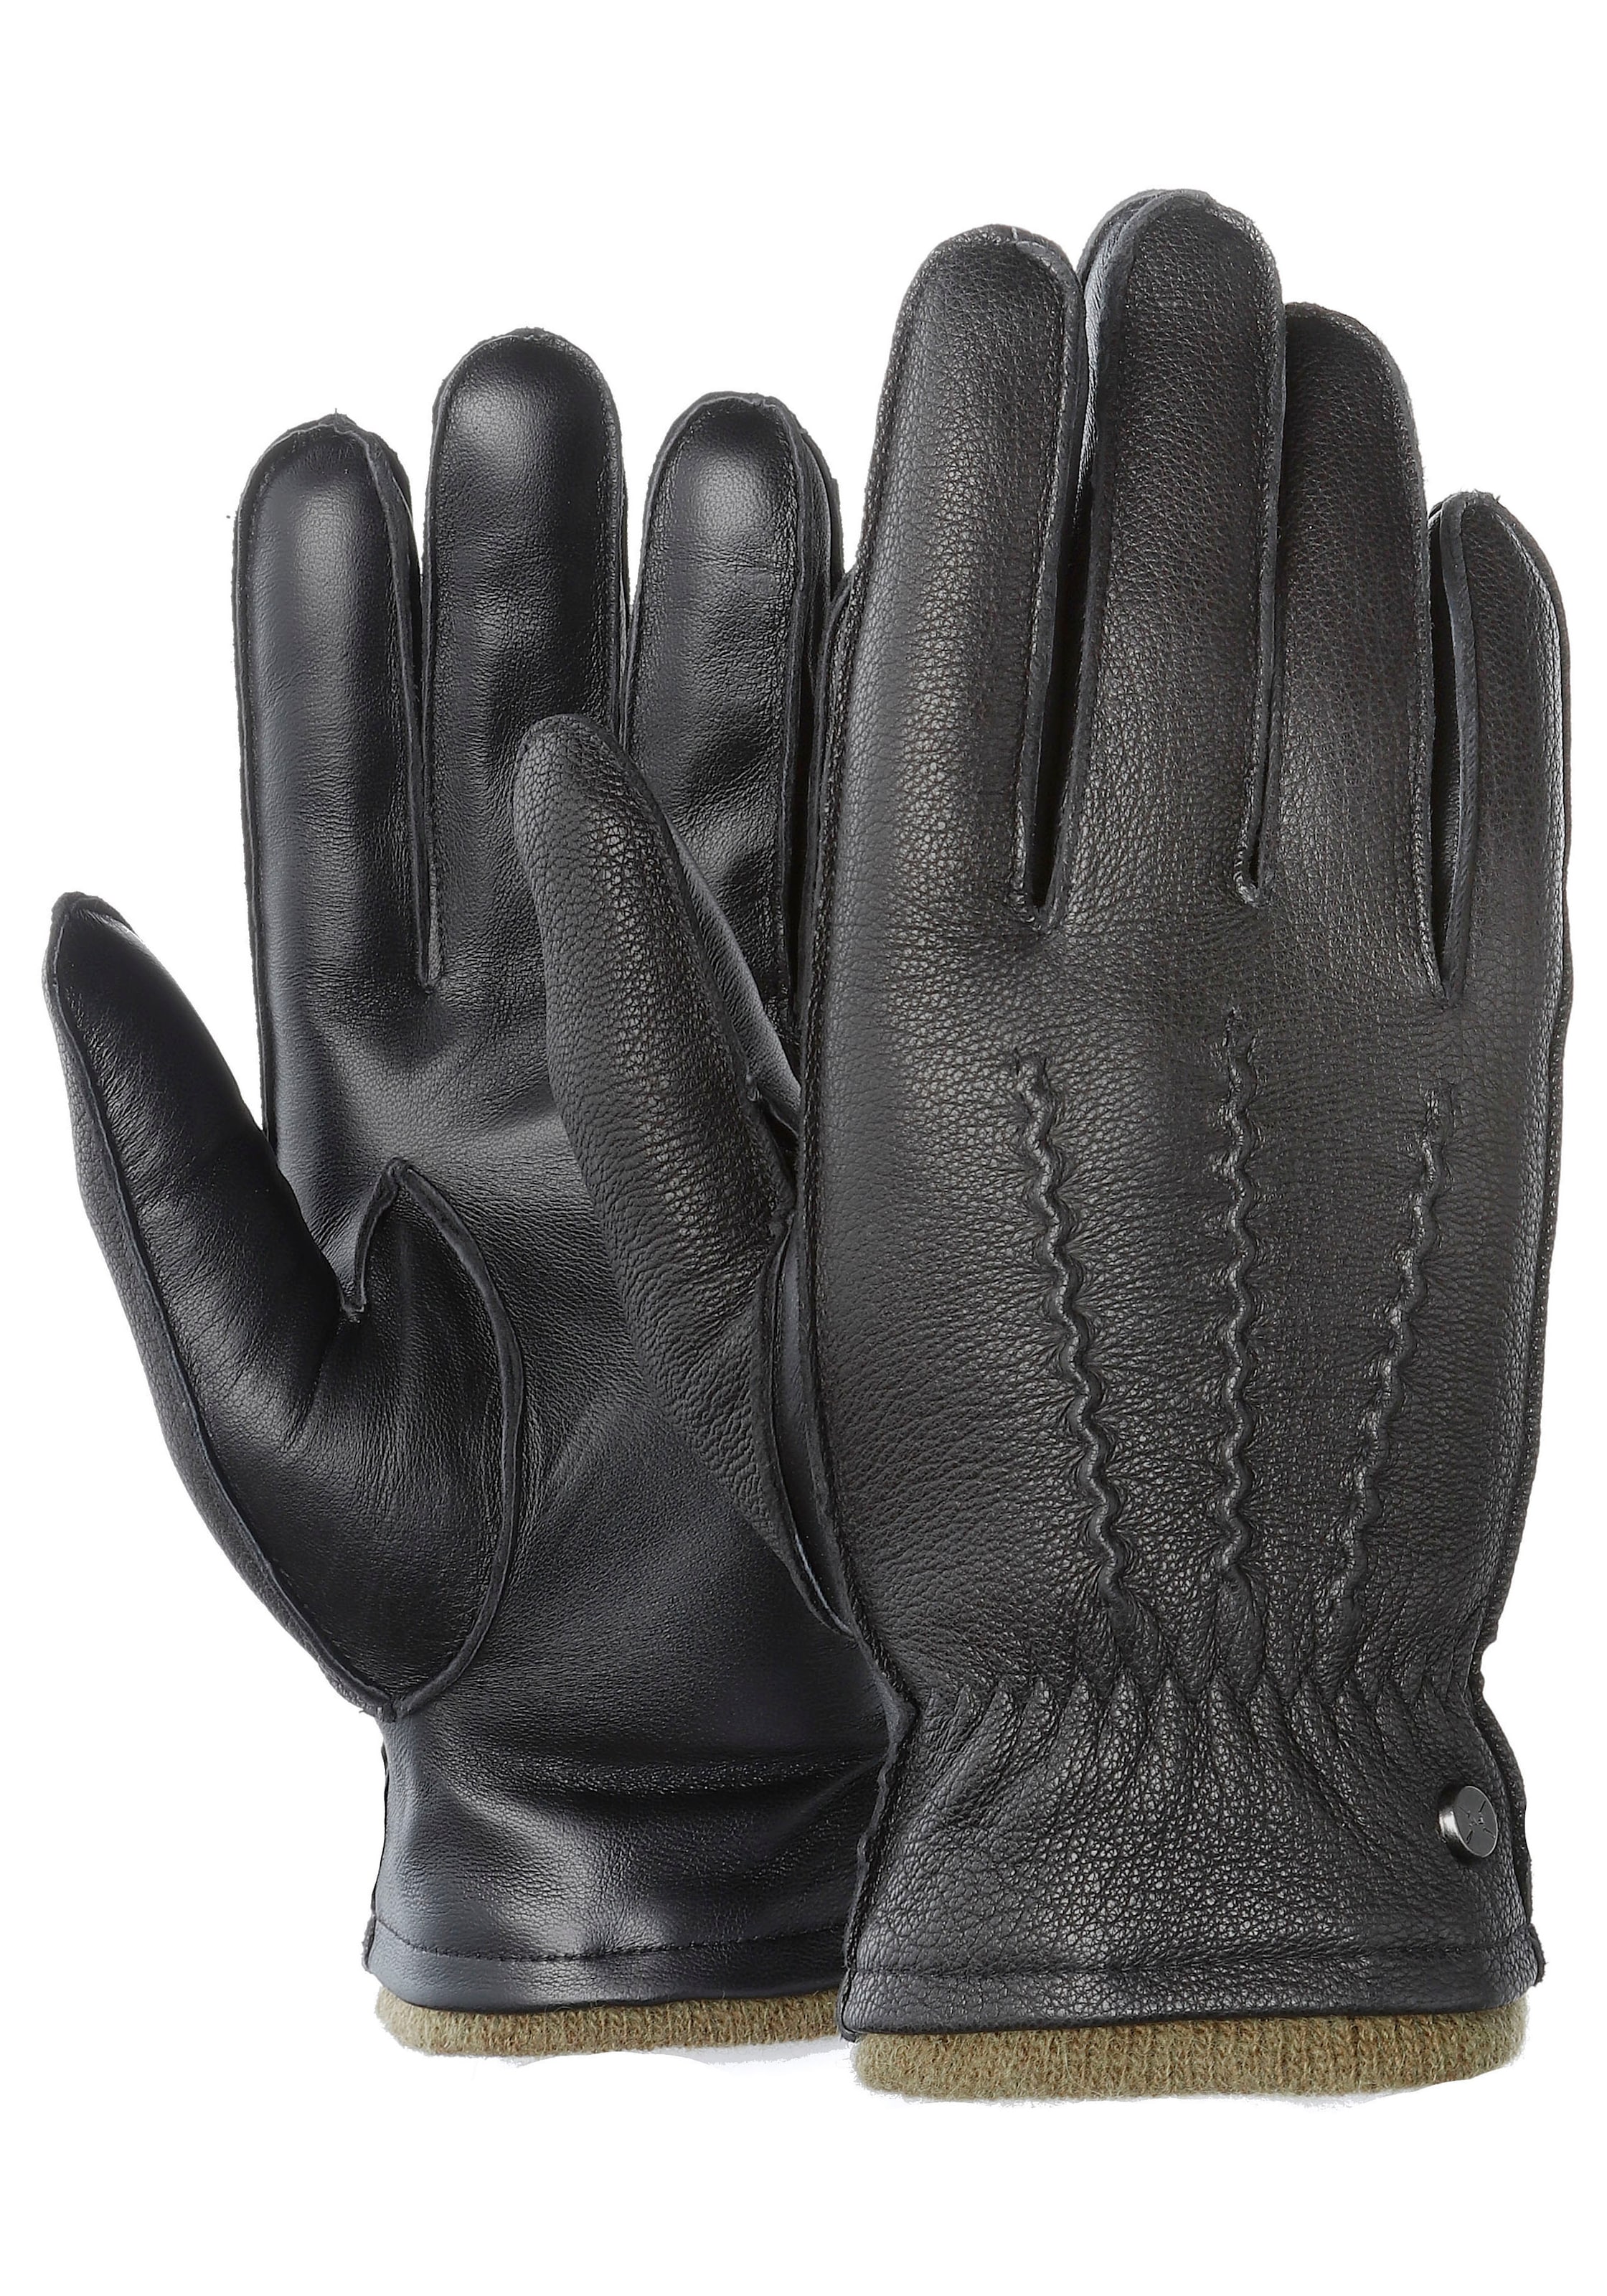 PEARLWOOD Lederhandschuhe »Miles«, Touchscreen proofed - 10 Finger System  online kaufen | Handschuhe